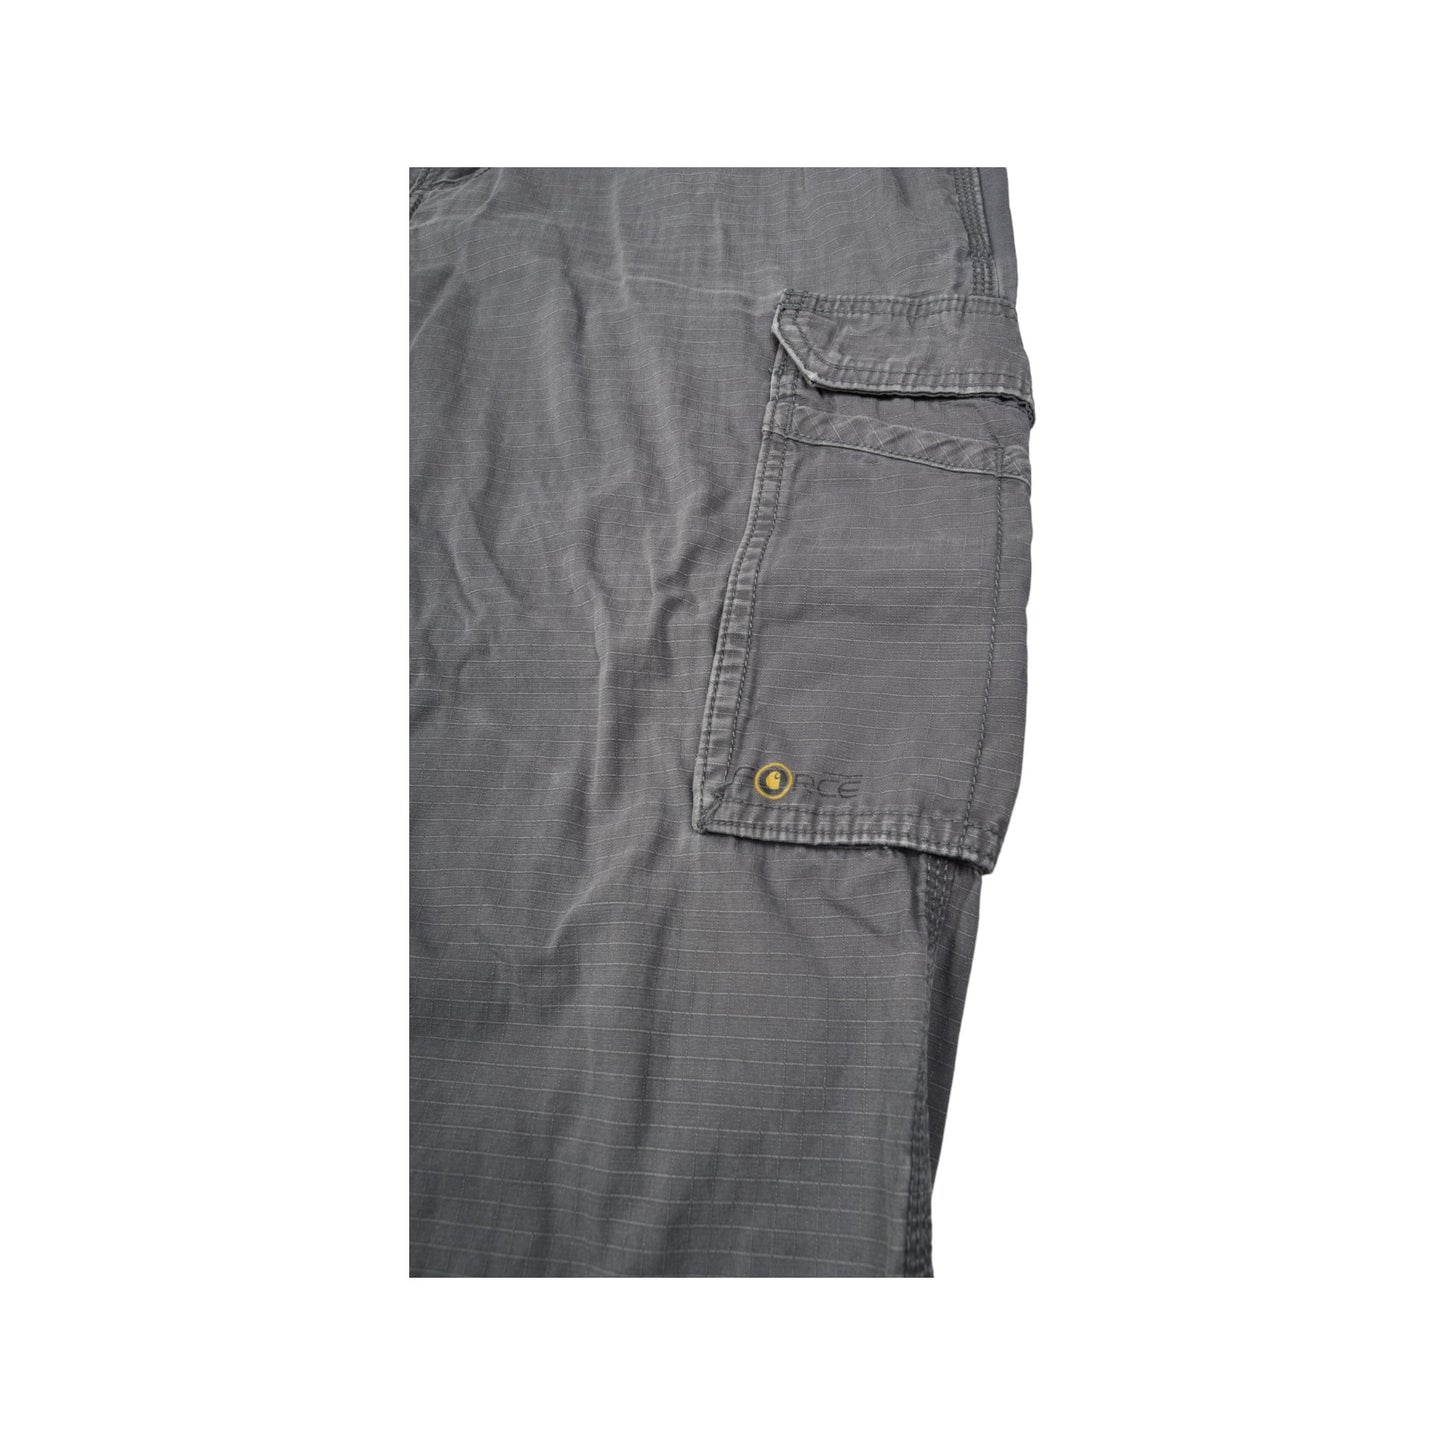 Vintage Carhartt Cargo Pants Grey W38 L32